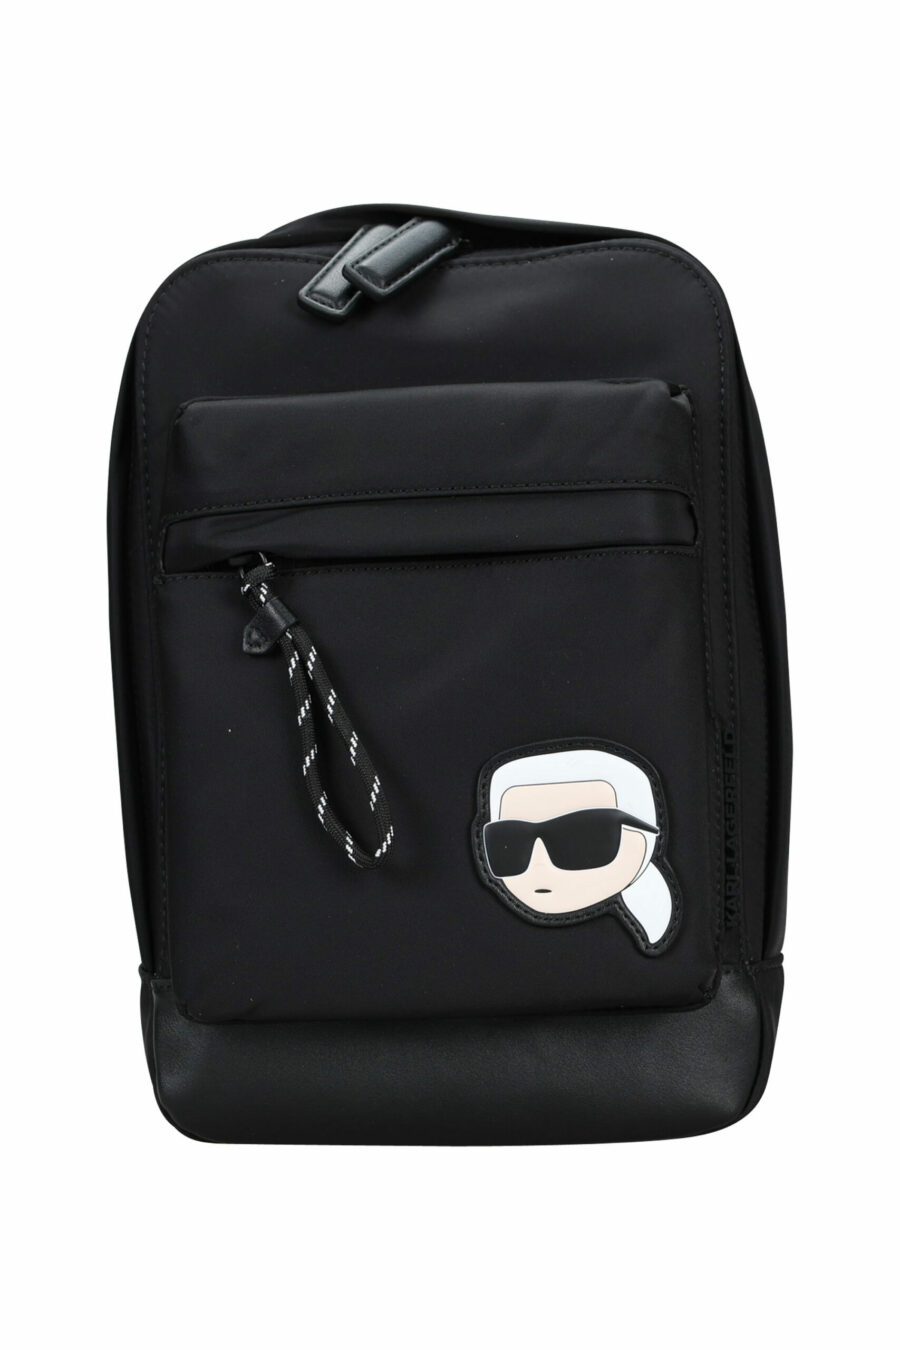 Black crossbody bag with mini-logo "kar" - 8720744411048 scaled